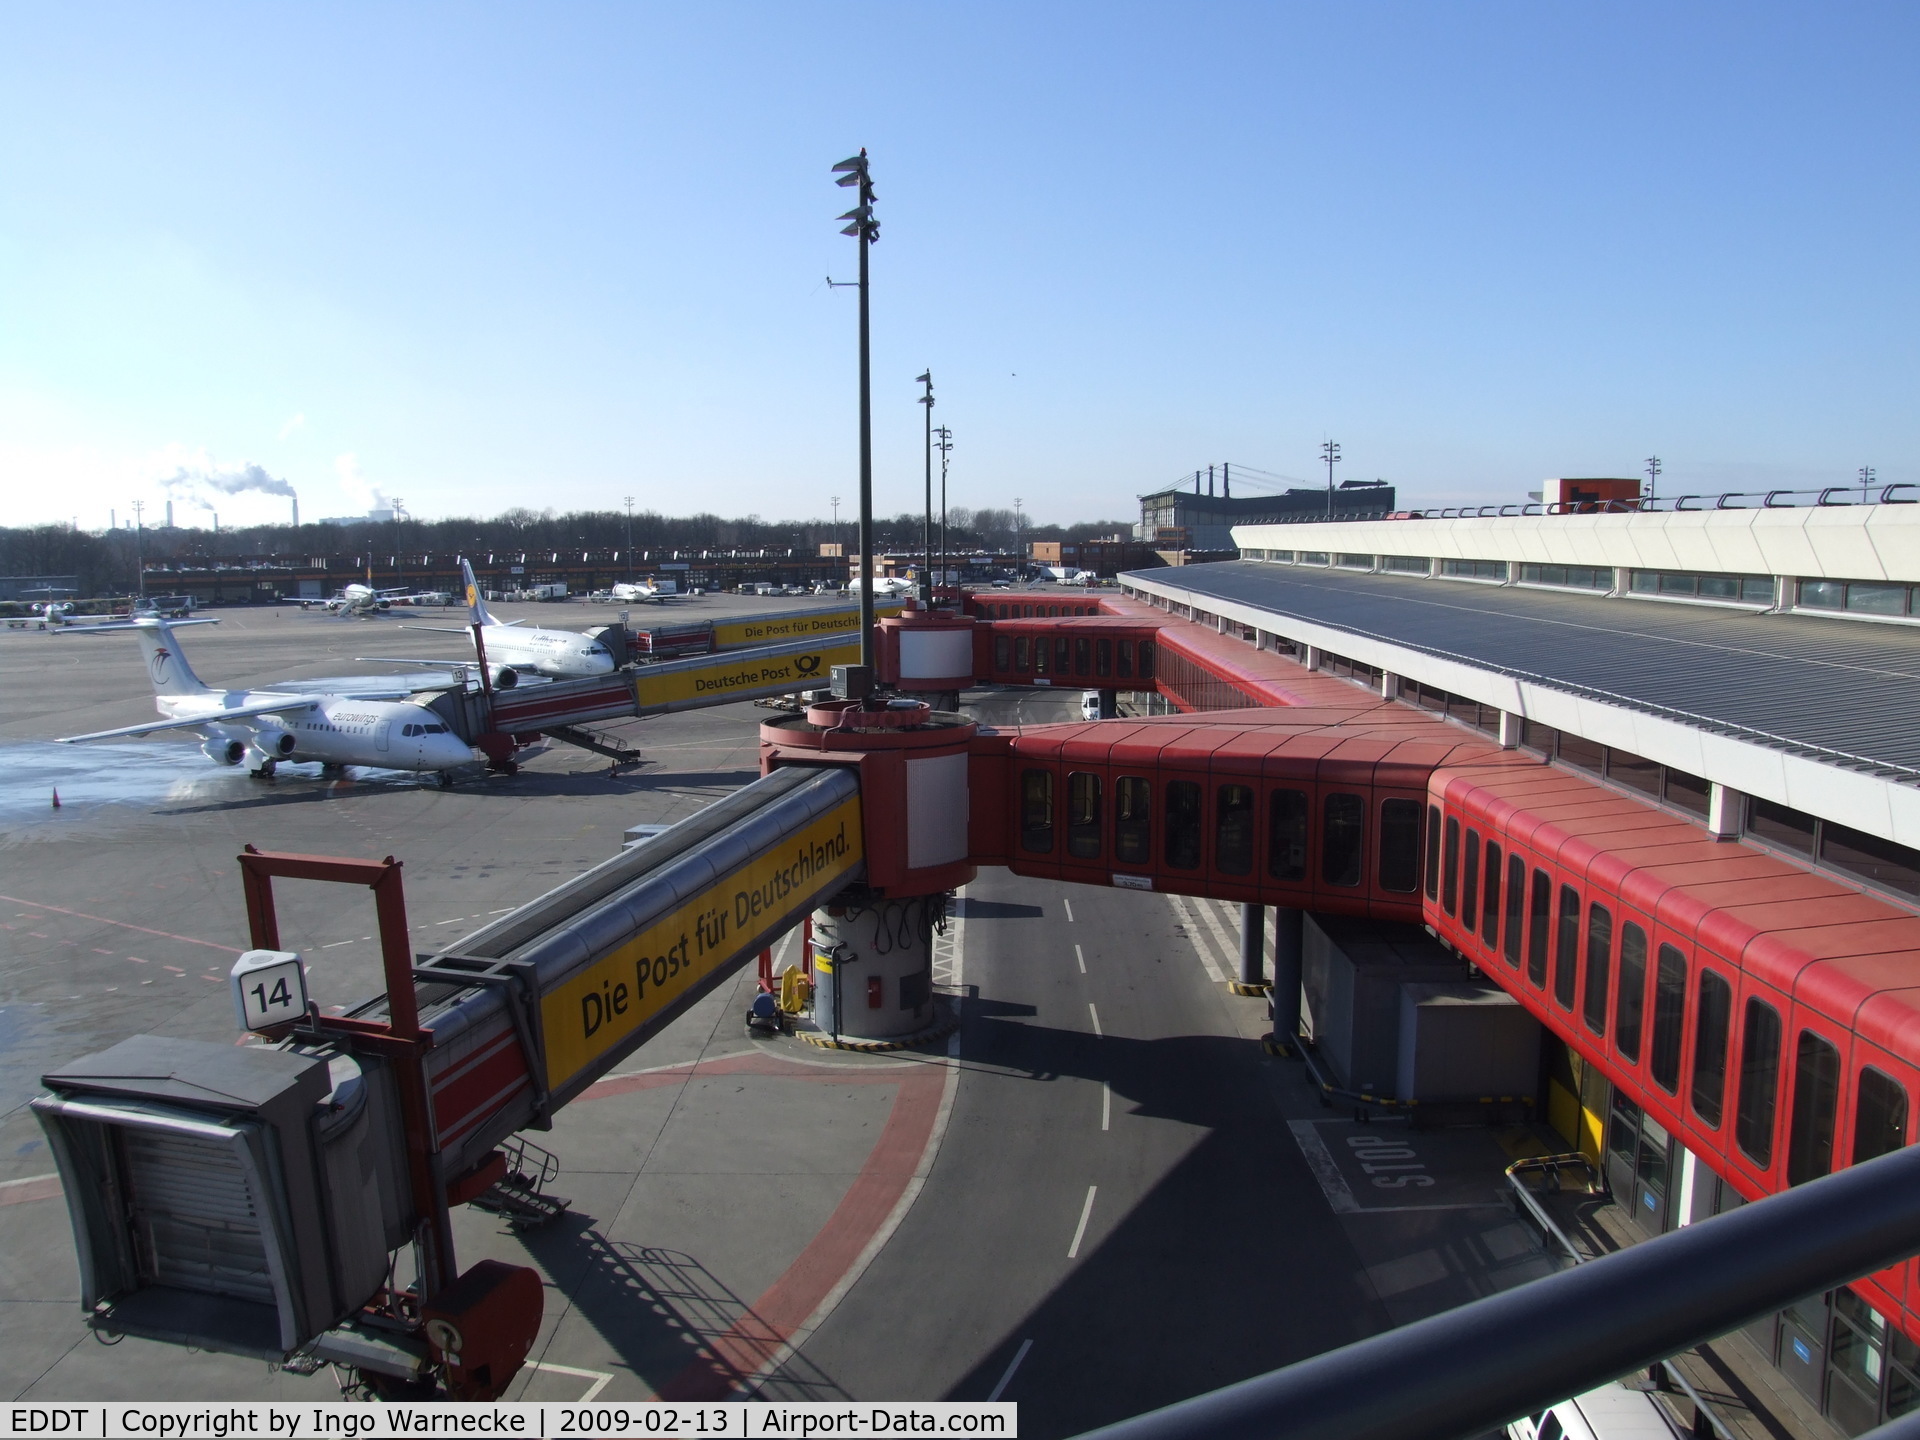 Tegel International Airport (closing in 2011), Berlin Germany (EDDT) - Berlin Tegel Airport, western docking 